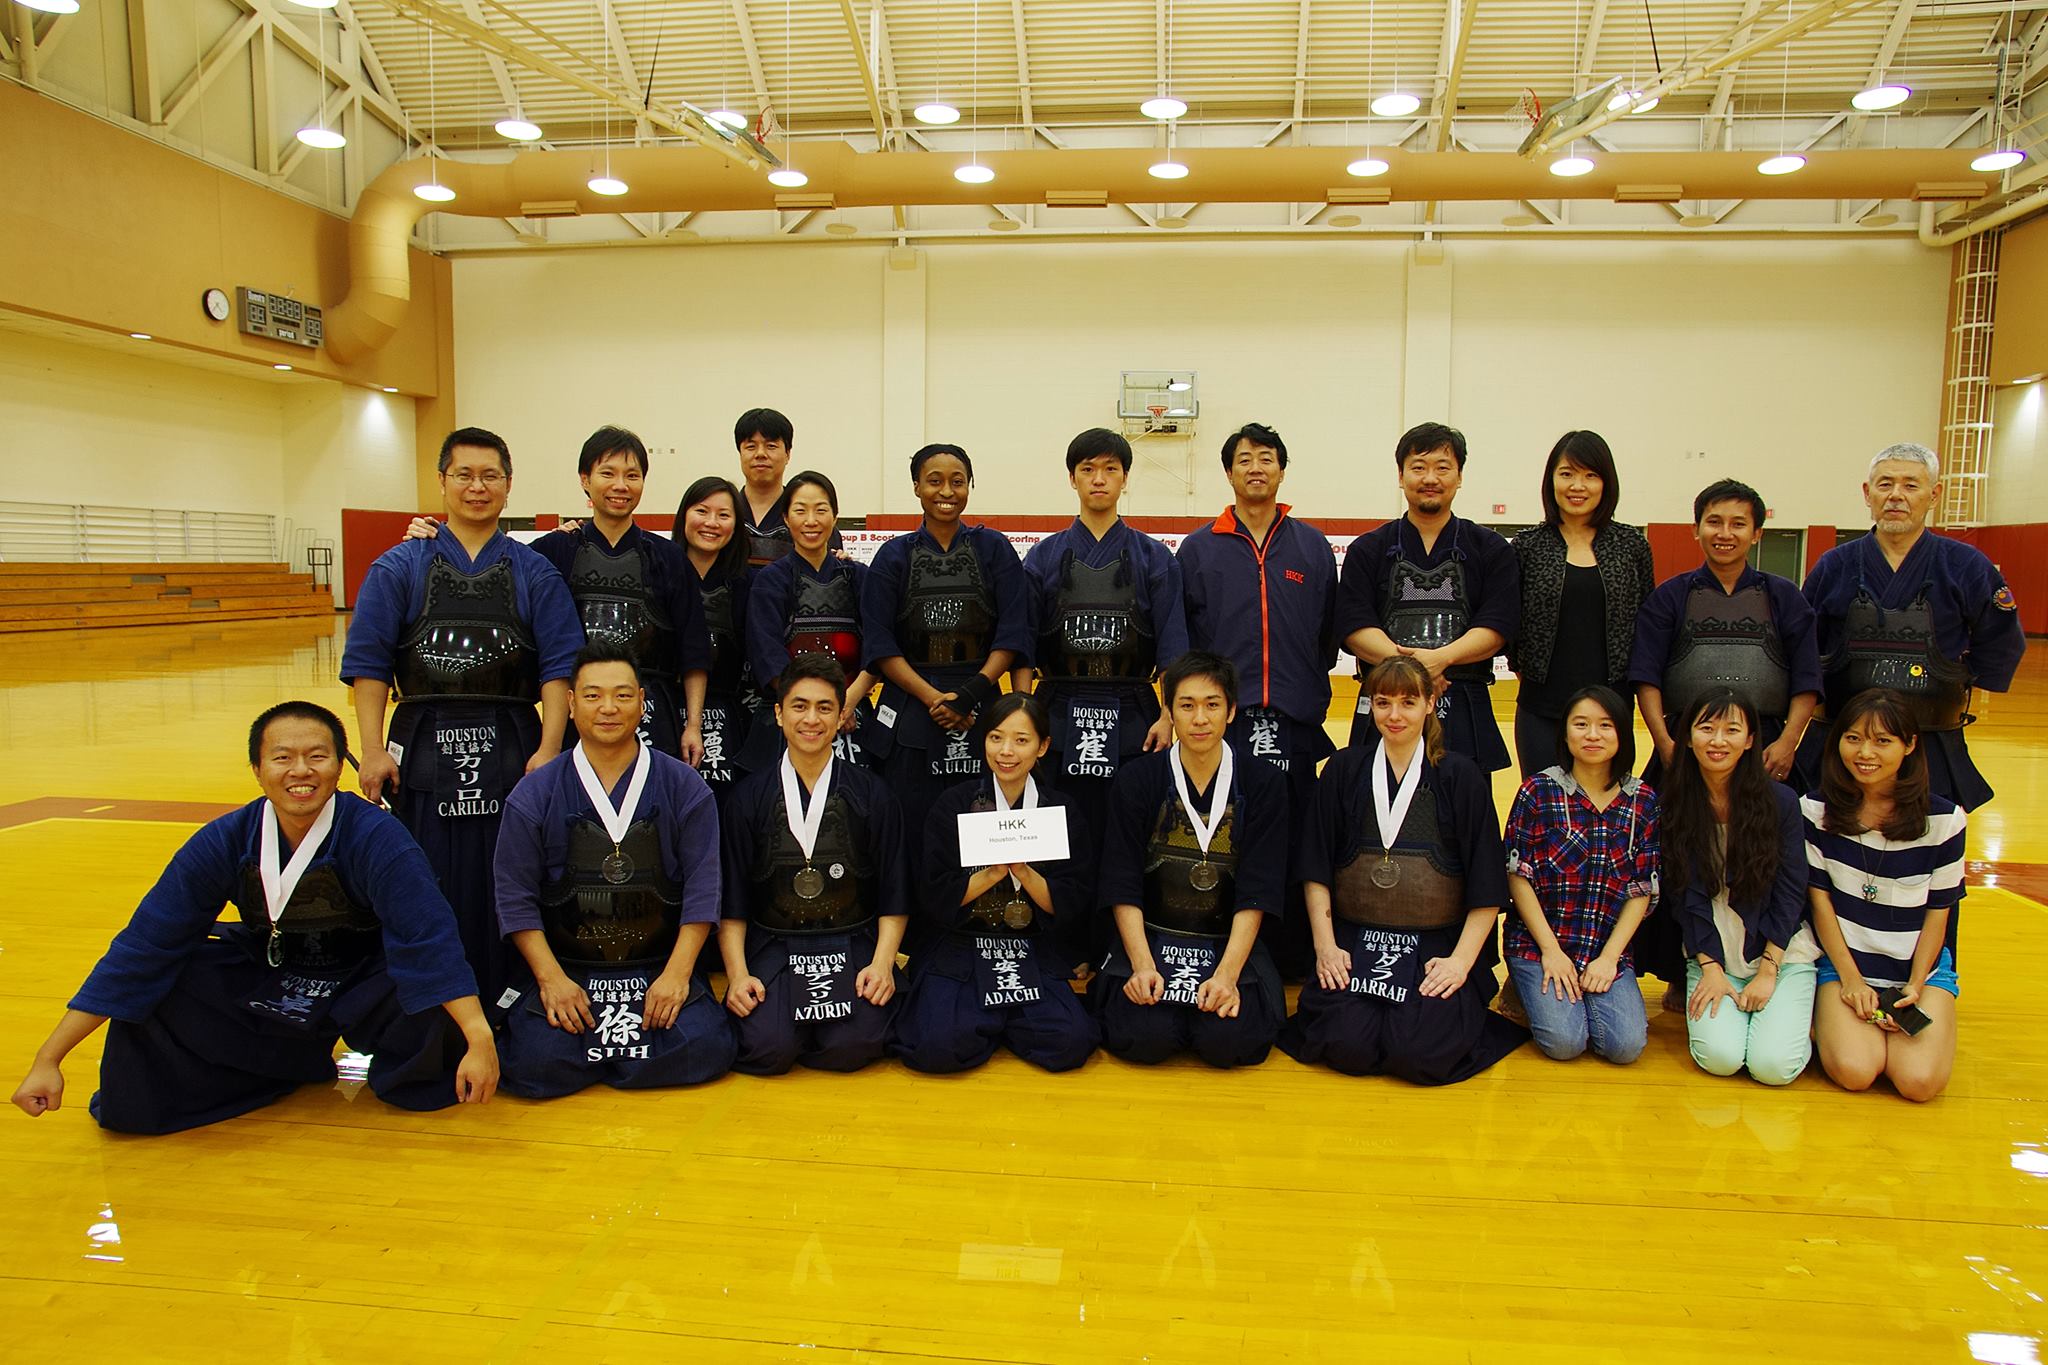  HKK members - 3rd place in 2015 Longhorn Invitational Kendo Team Taikai - Austin, TX  